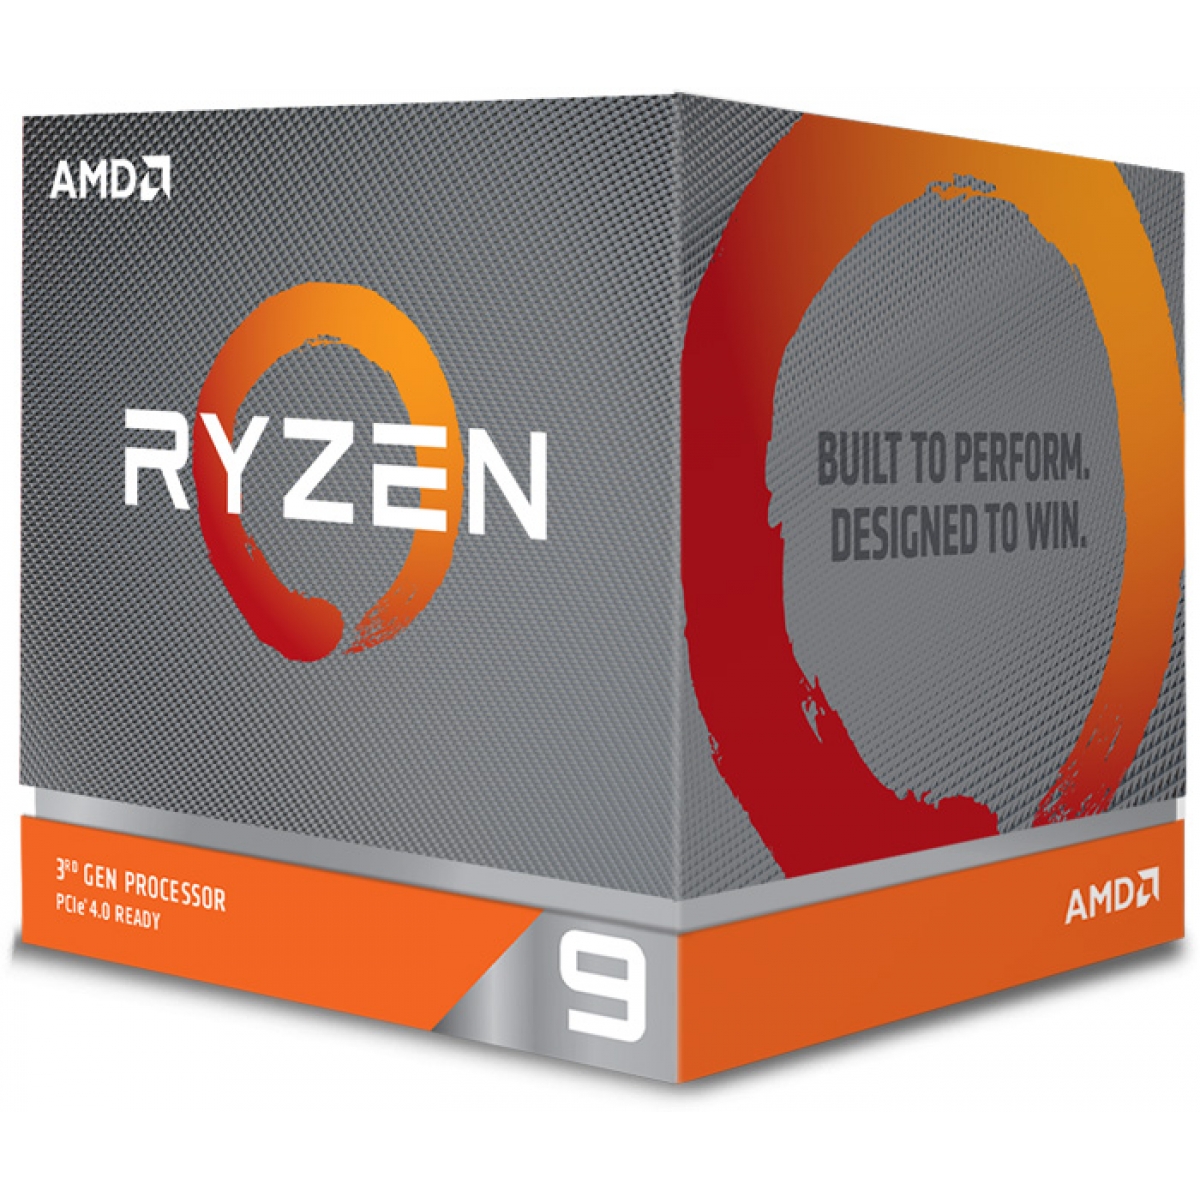 Processador AMD Ryzen 9 3900x 3.8ghz (4.6ghz Turbo), 12-cores 24-threads, Wraith Prism RGB, AM4, 100-100000023BOX, S/ Video - OPEN BOX 